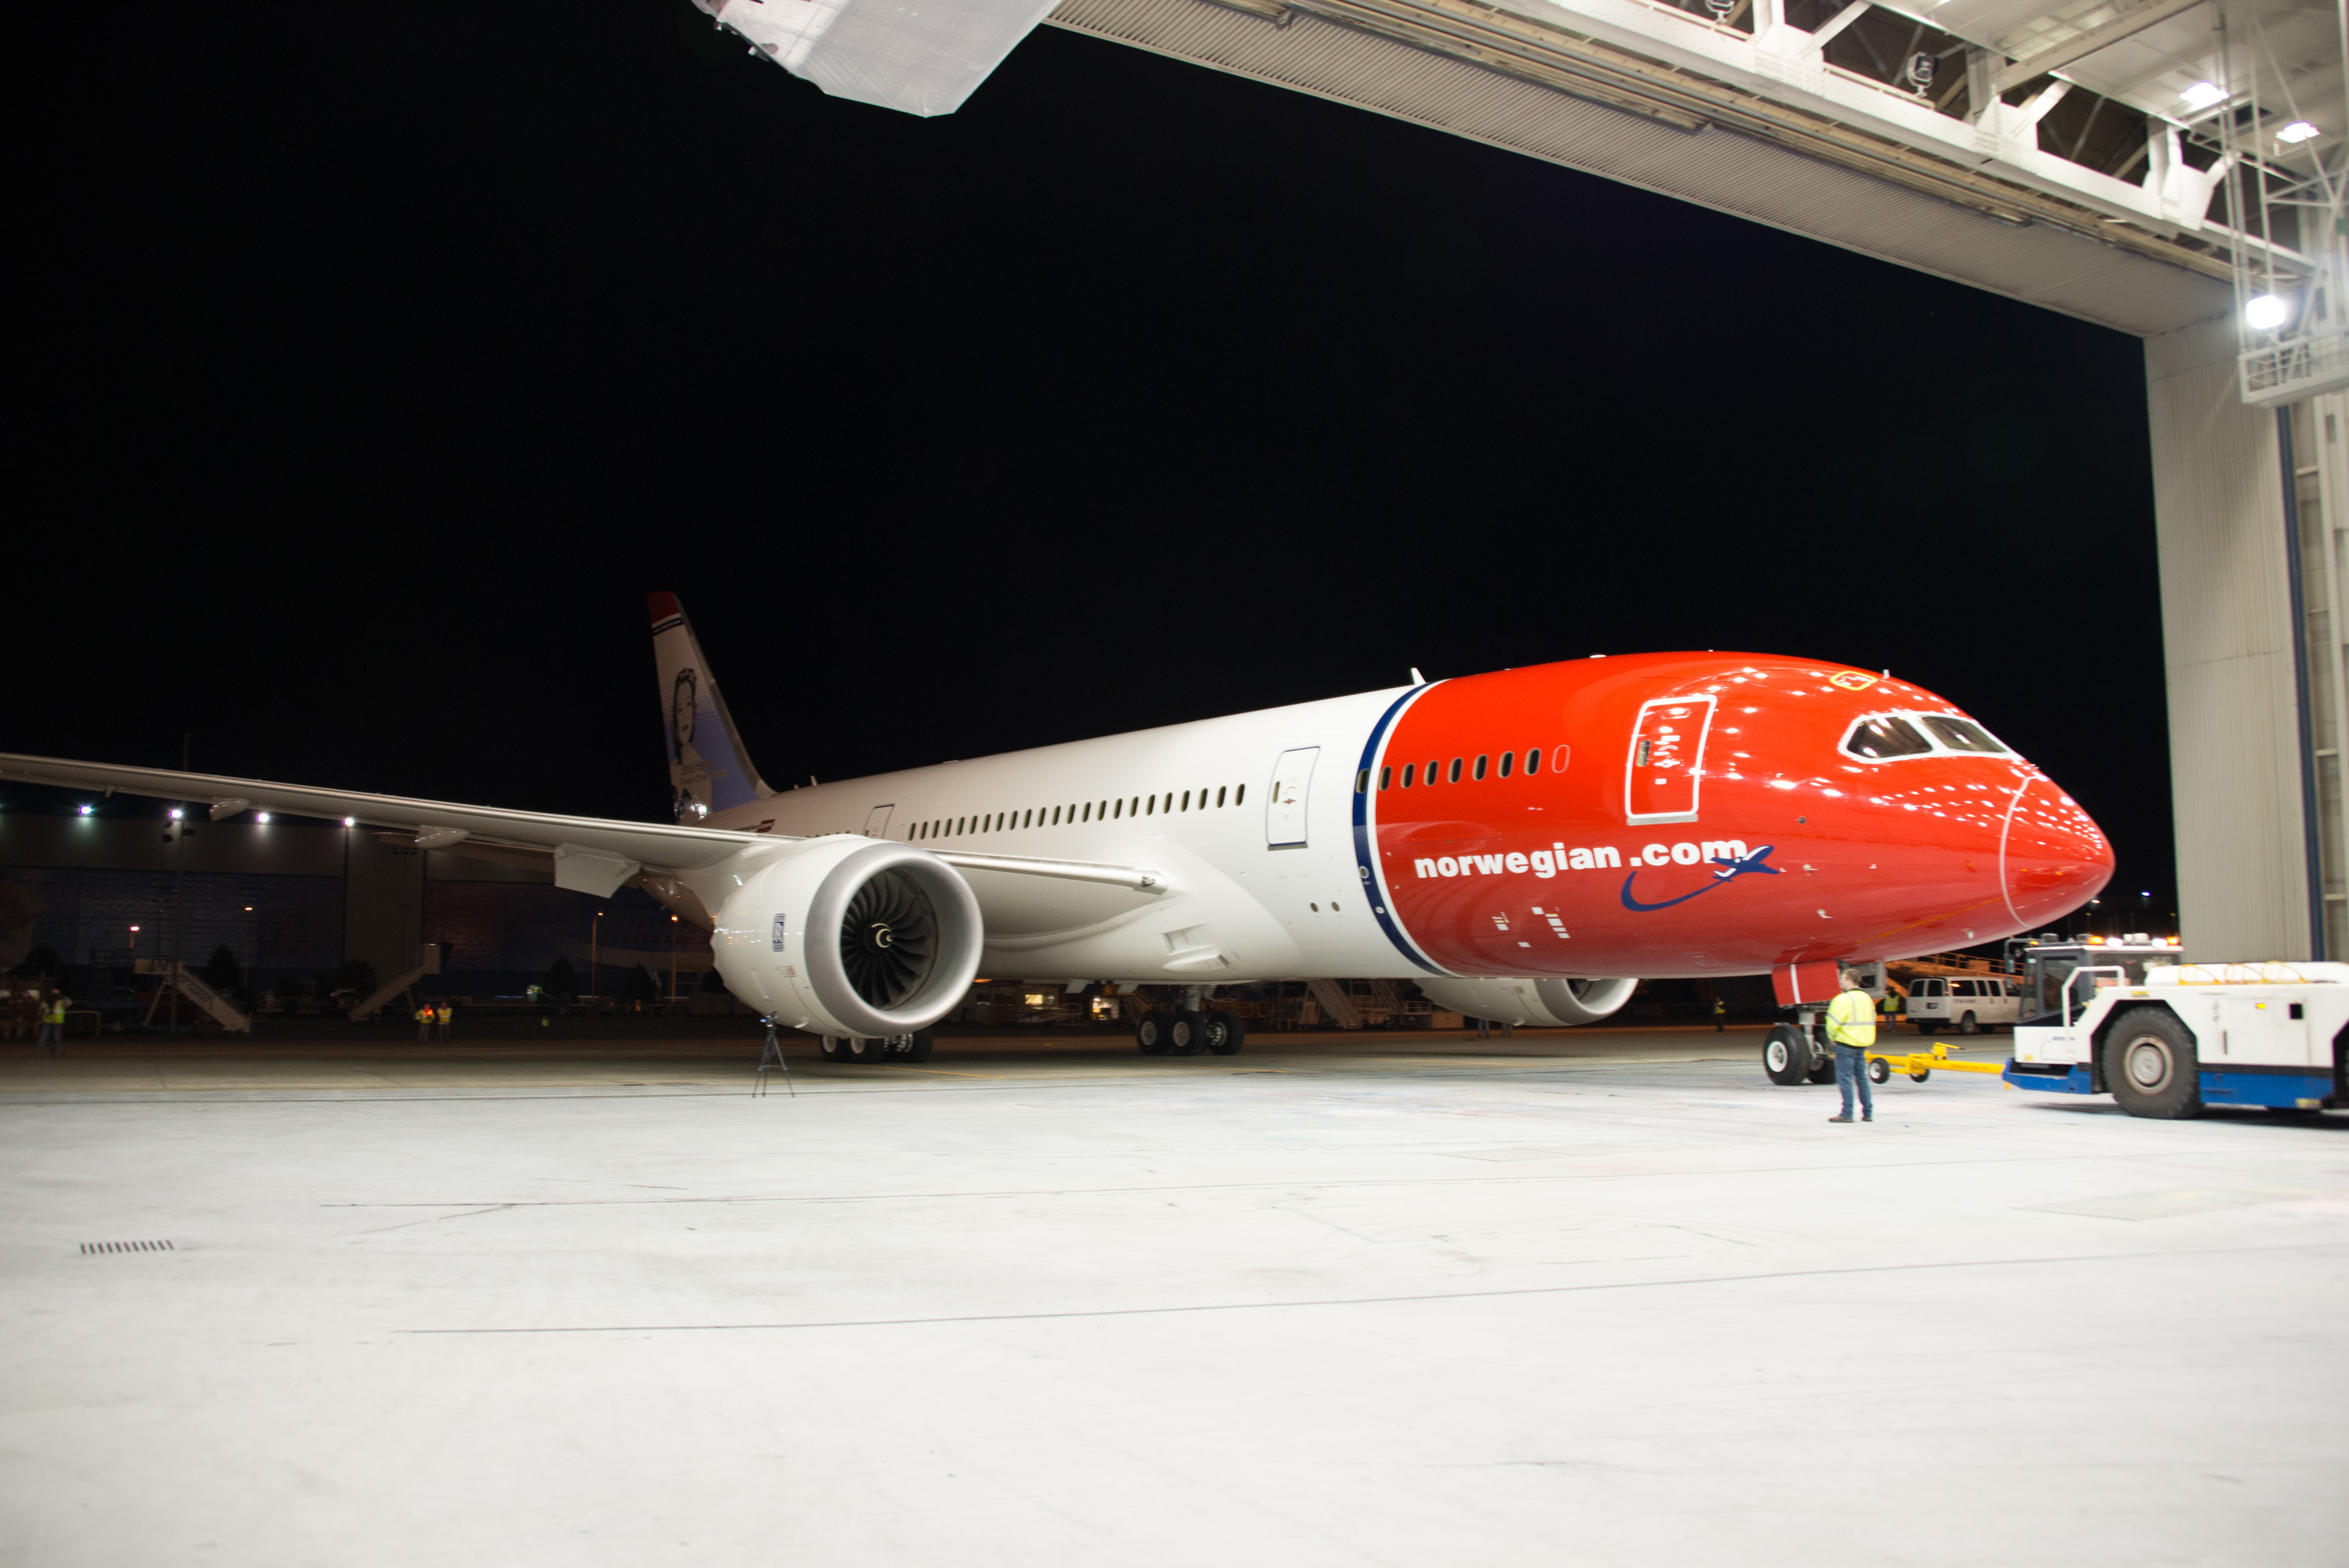 Norwegian Air's first Boeing 787 Dreamliner. Image from Norwegian.